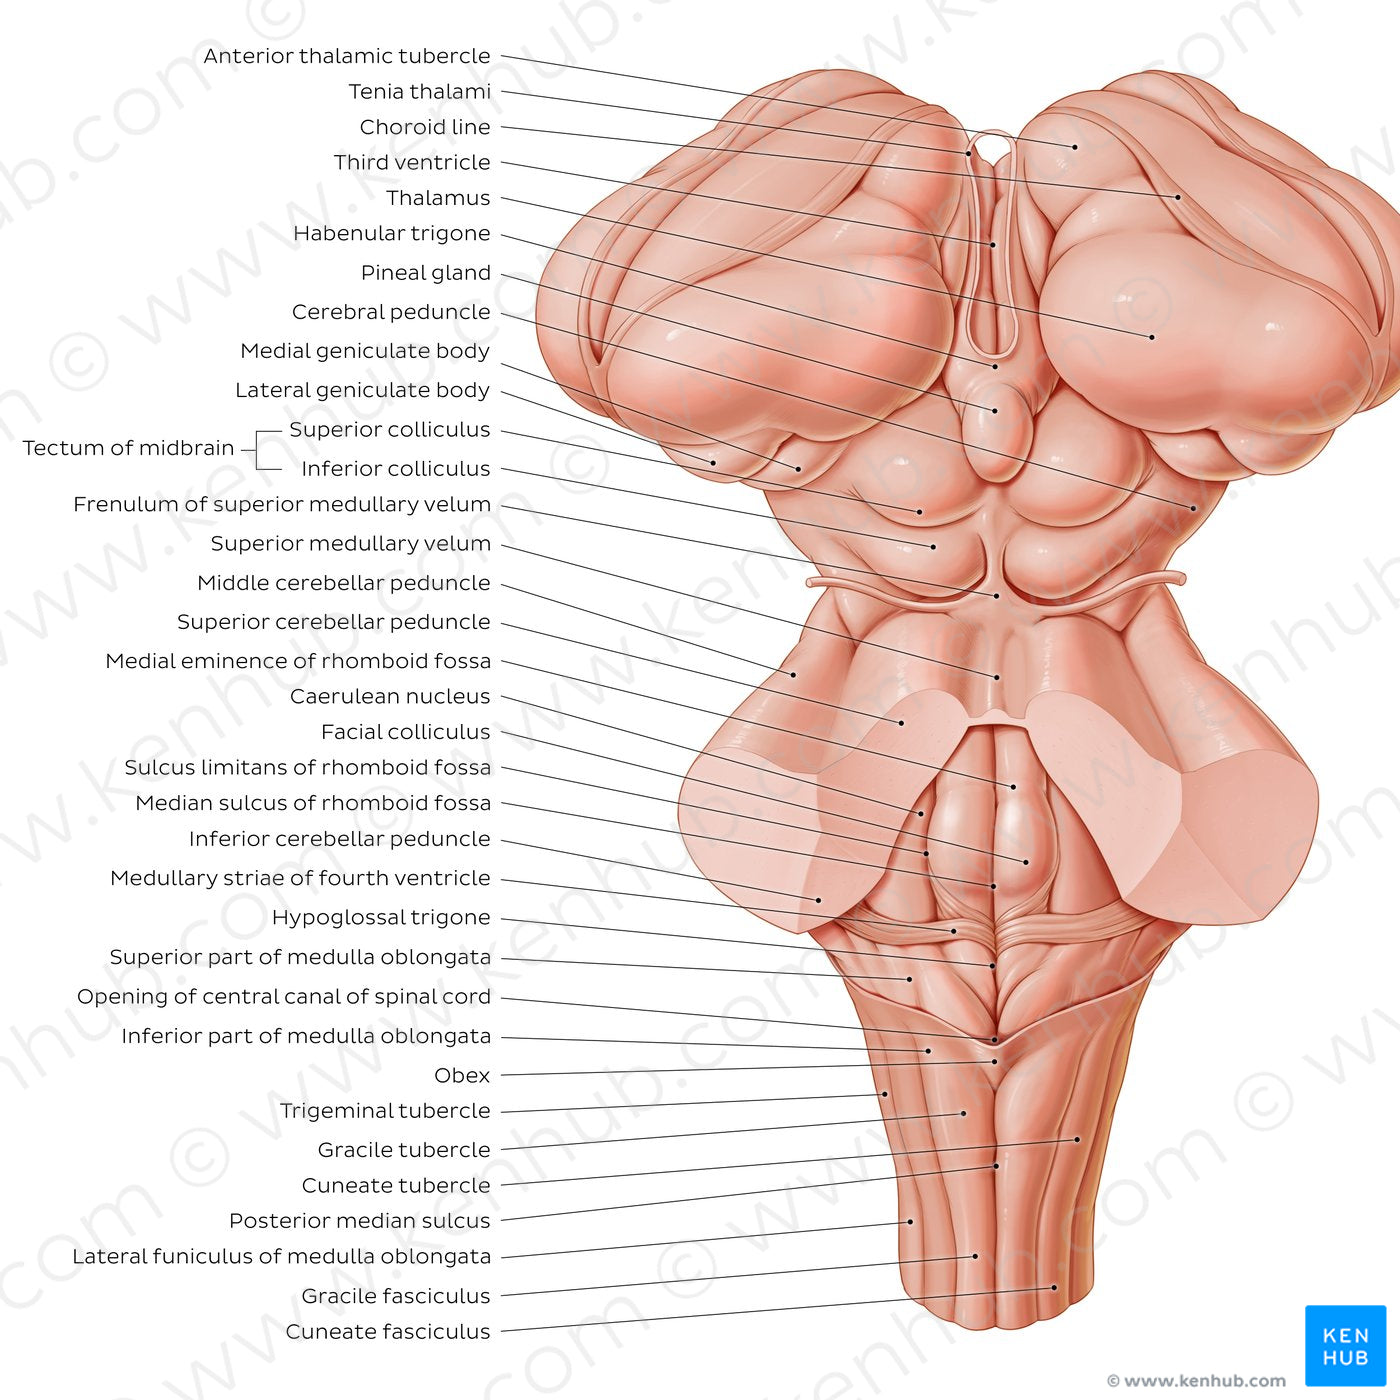 Surface anatomy of the brainstem (English)